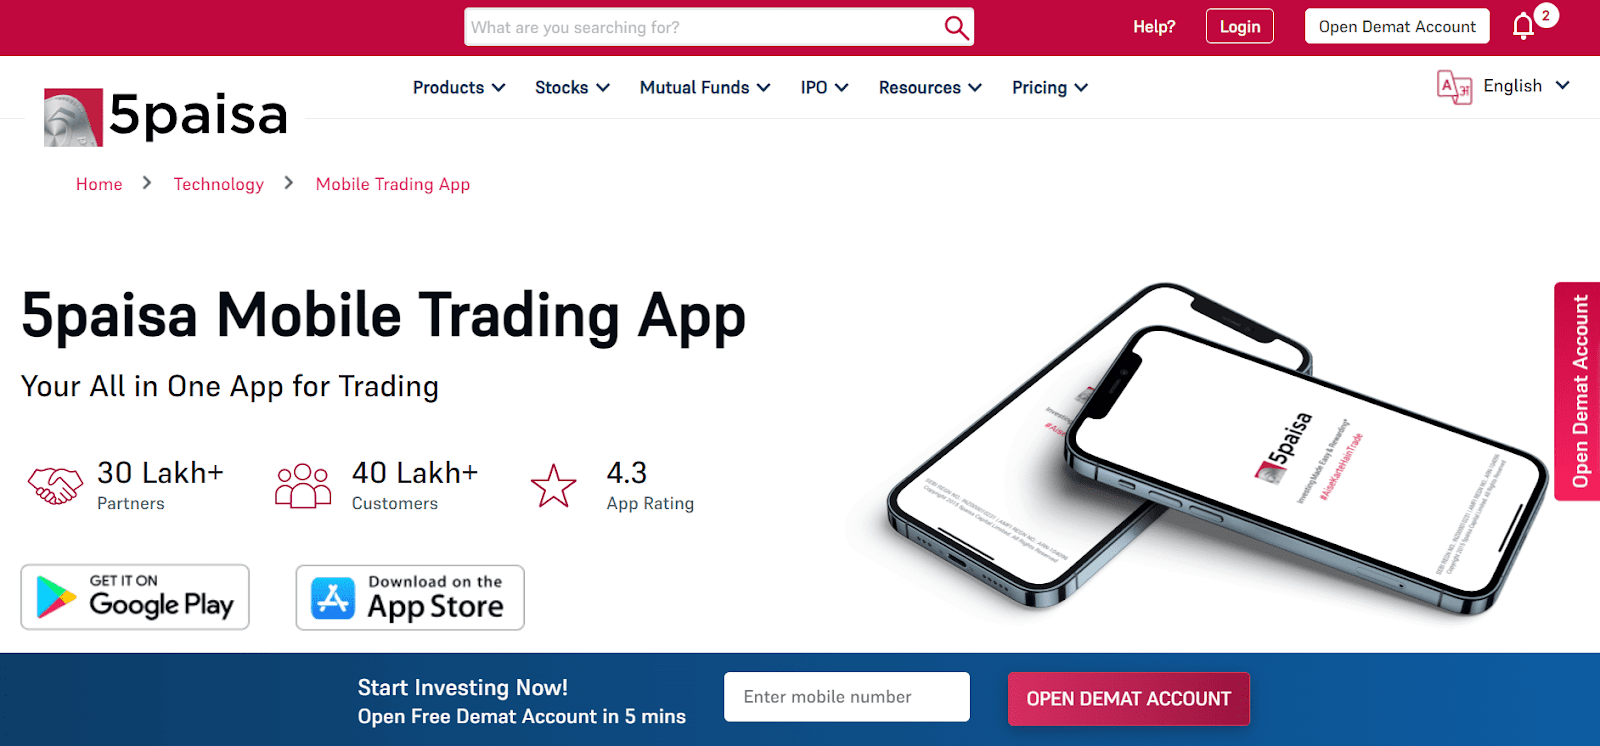 5paisa Mobile Trading App